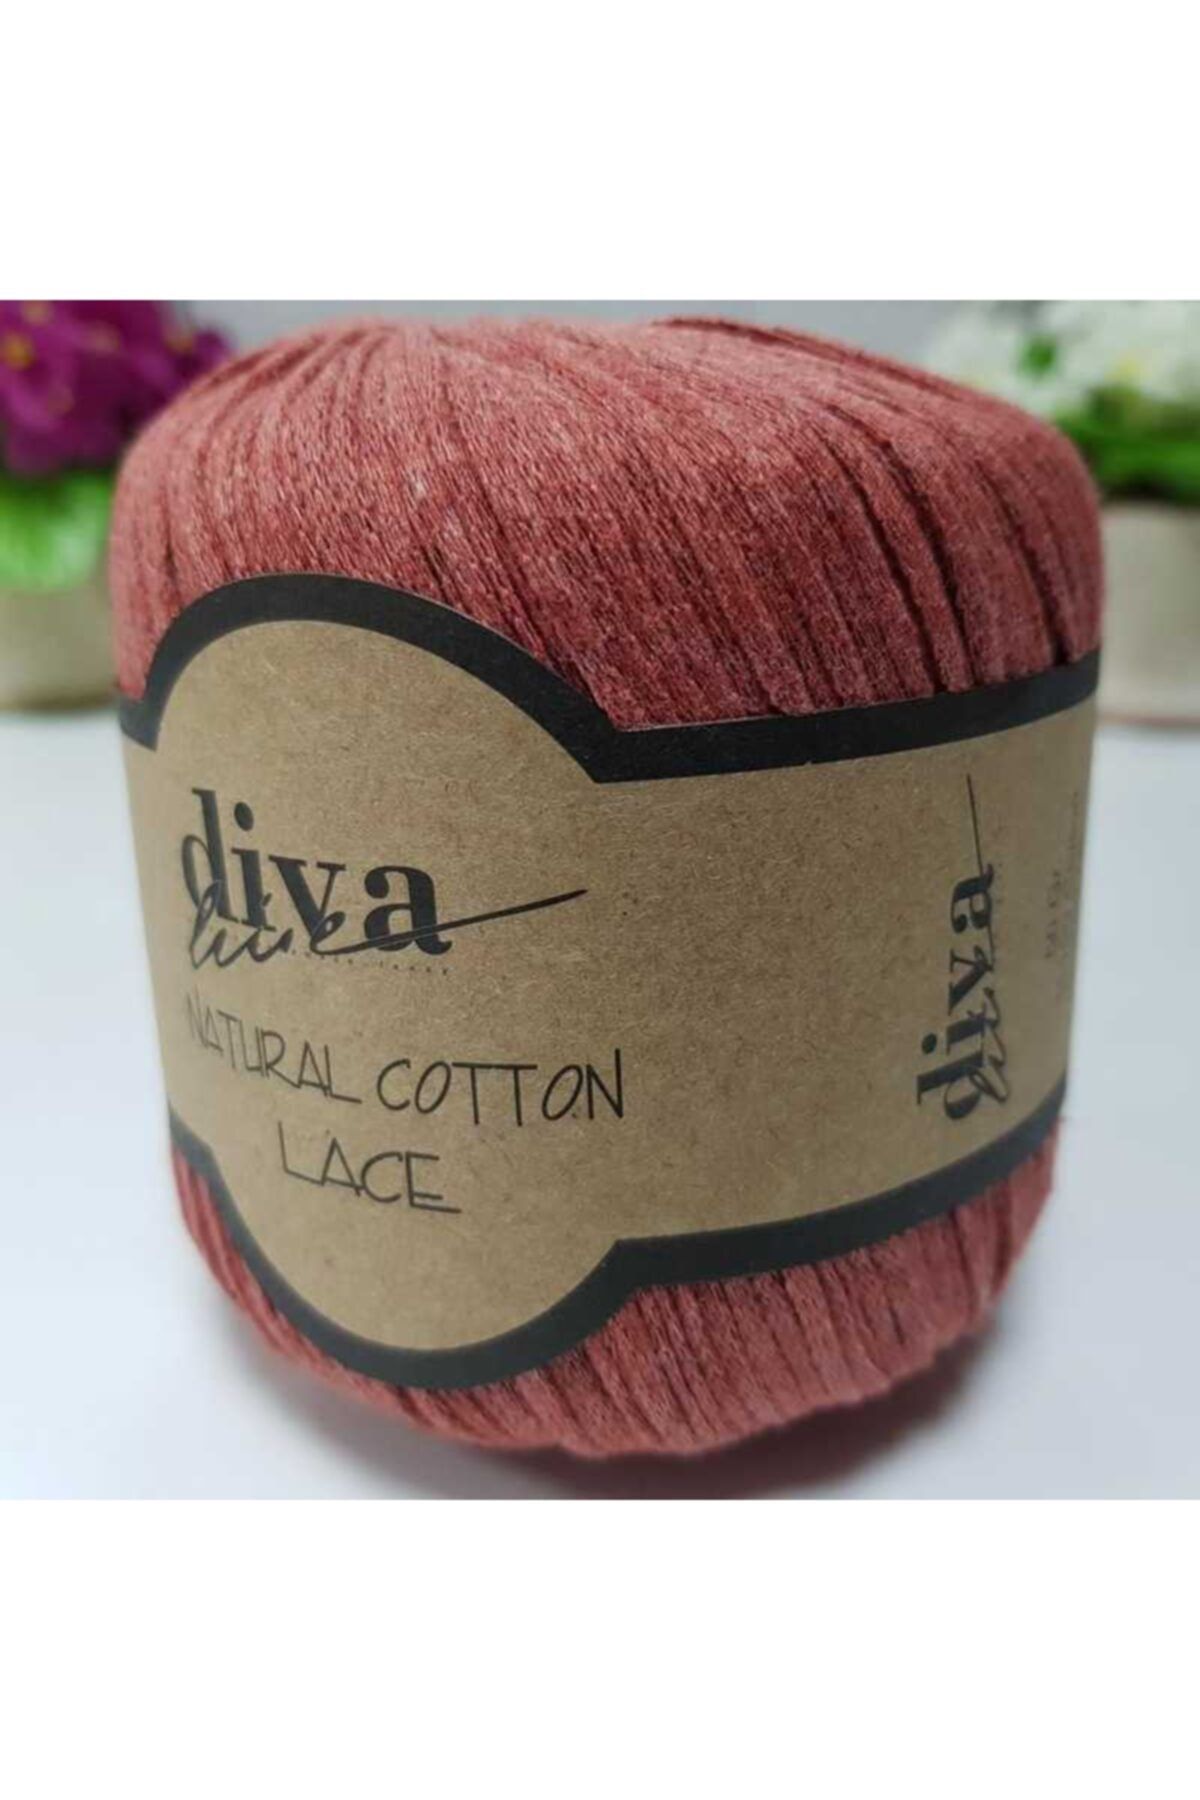 Diva İplik Diva Natural Cotton Lace Lase Ipi 1964 Tarçın